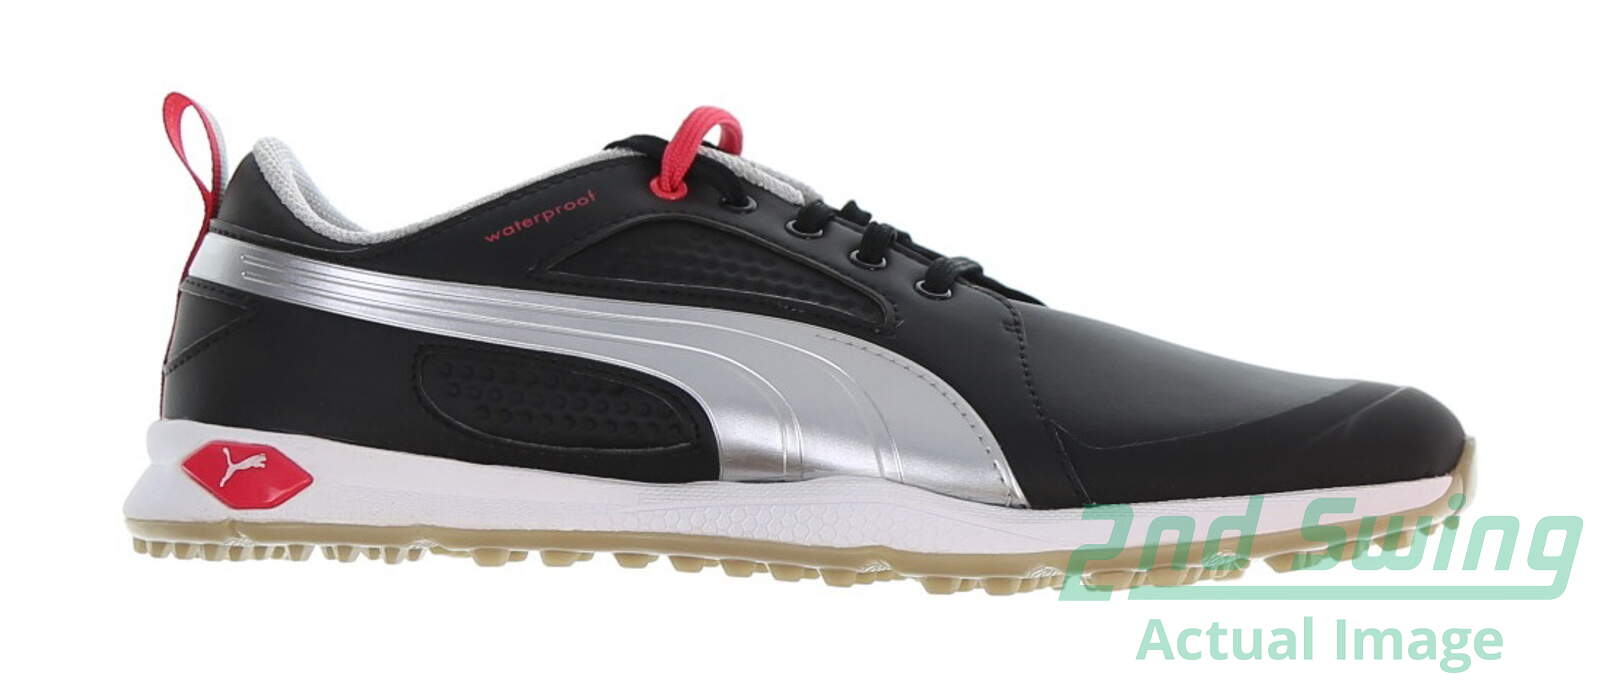 puma biofly golf shoes